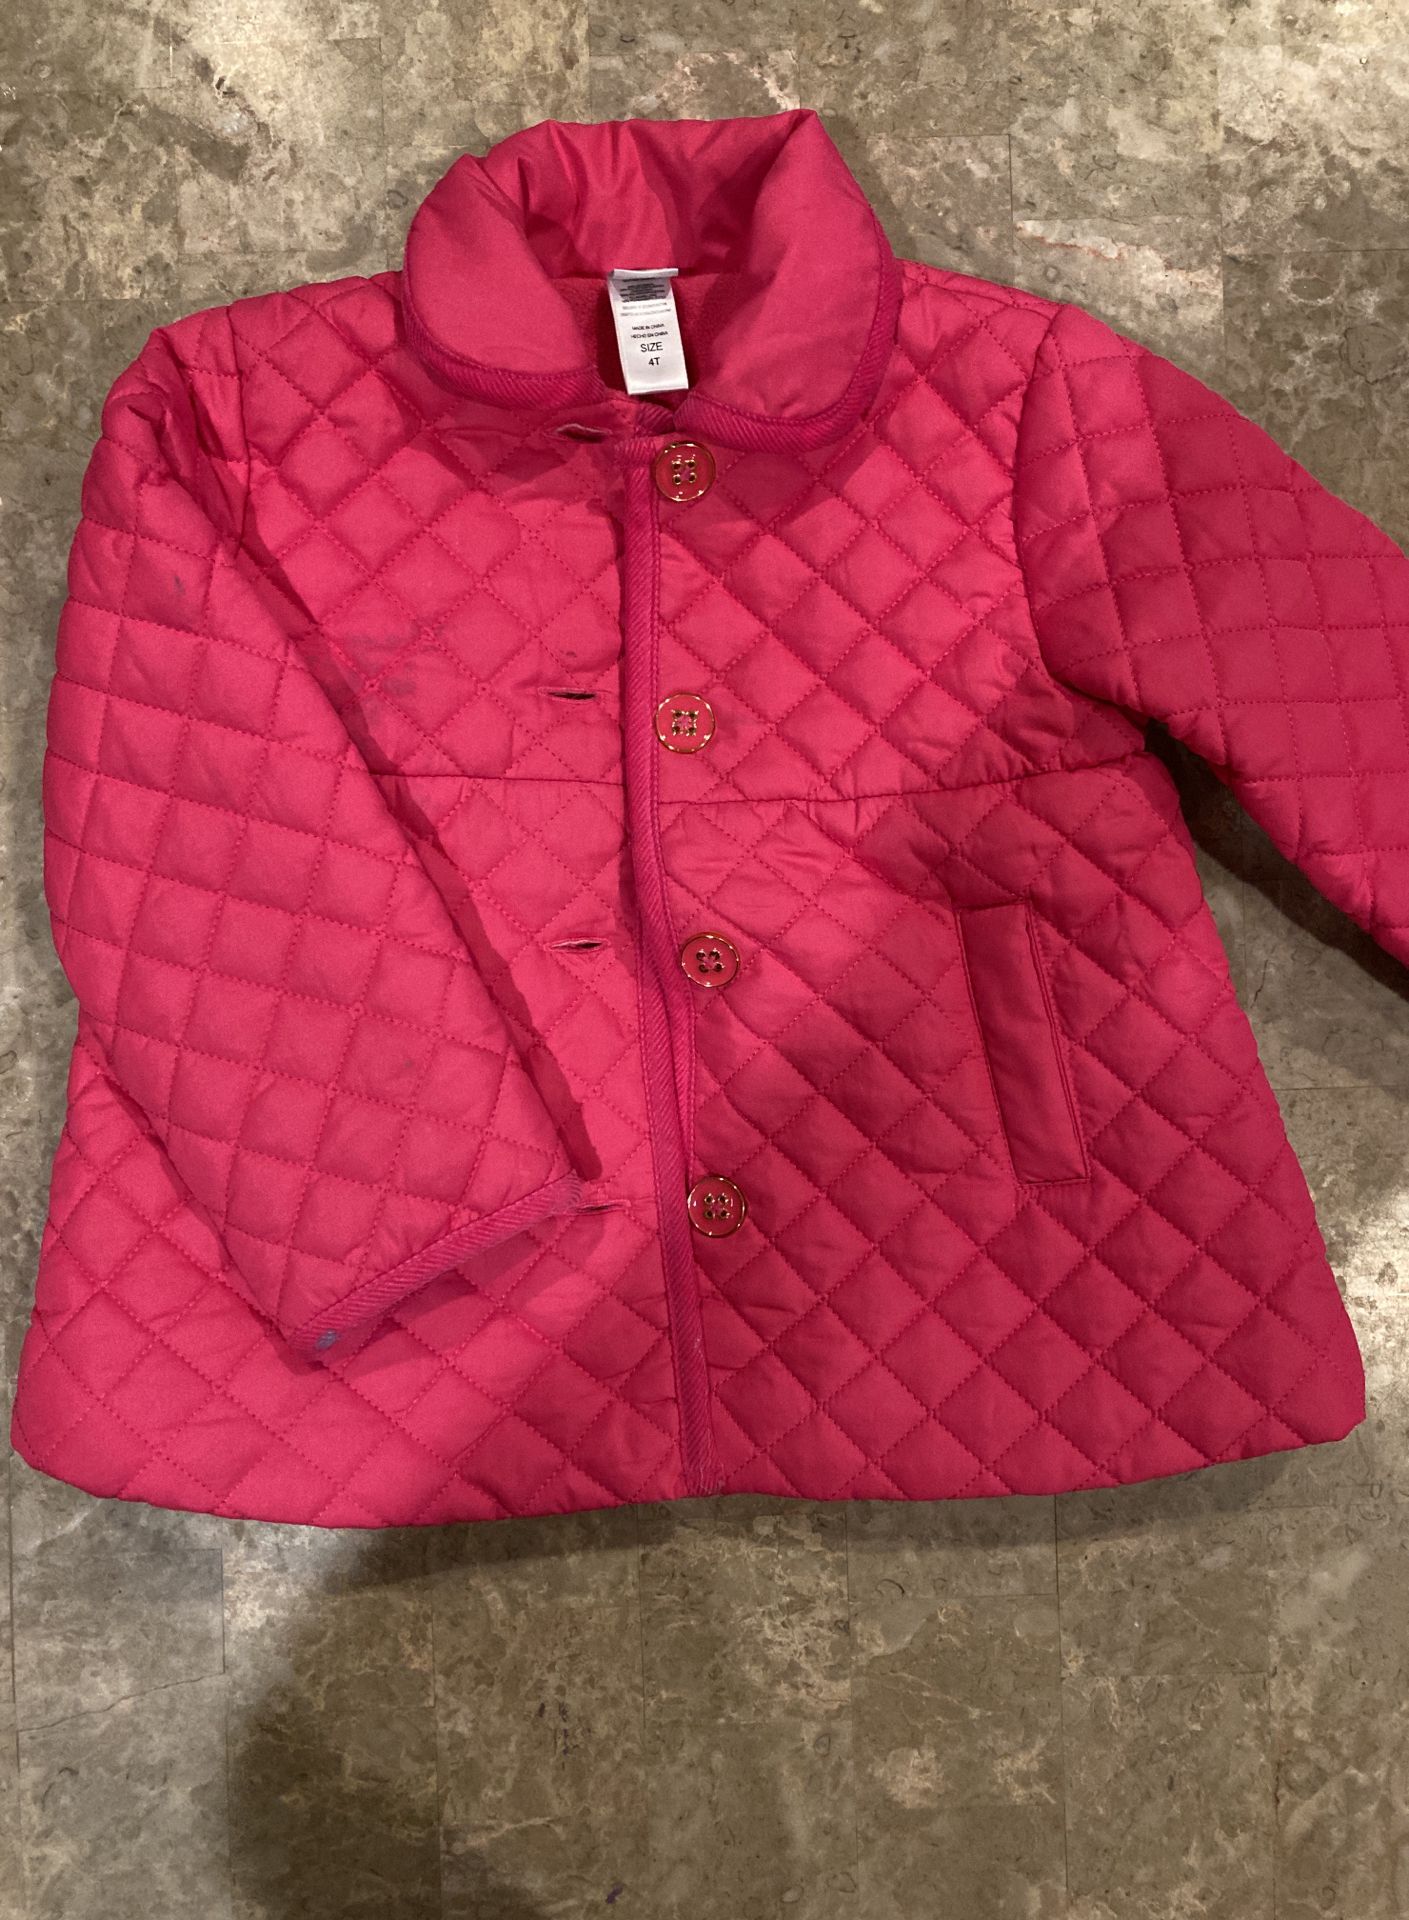 Pink Little Me Jacket Size 4T